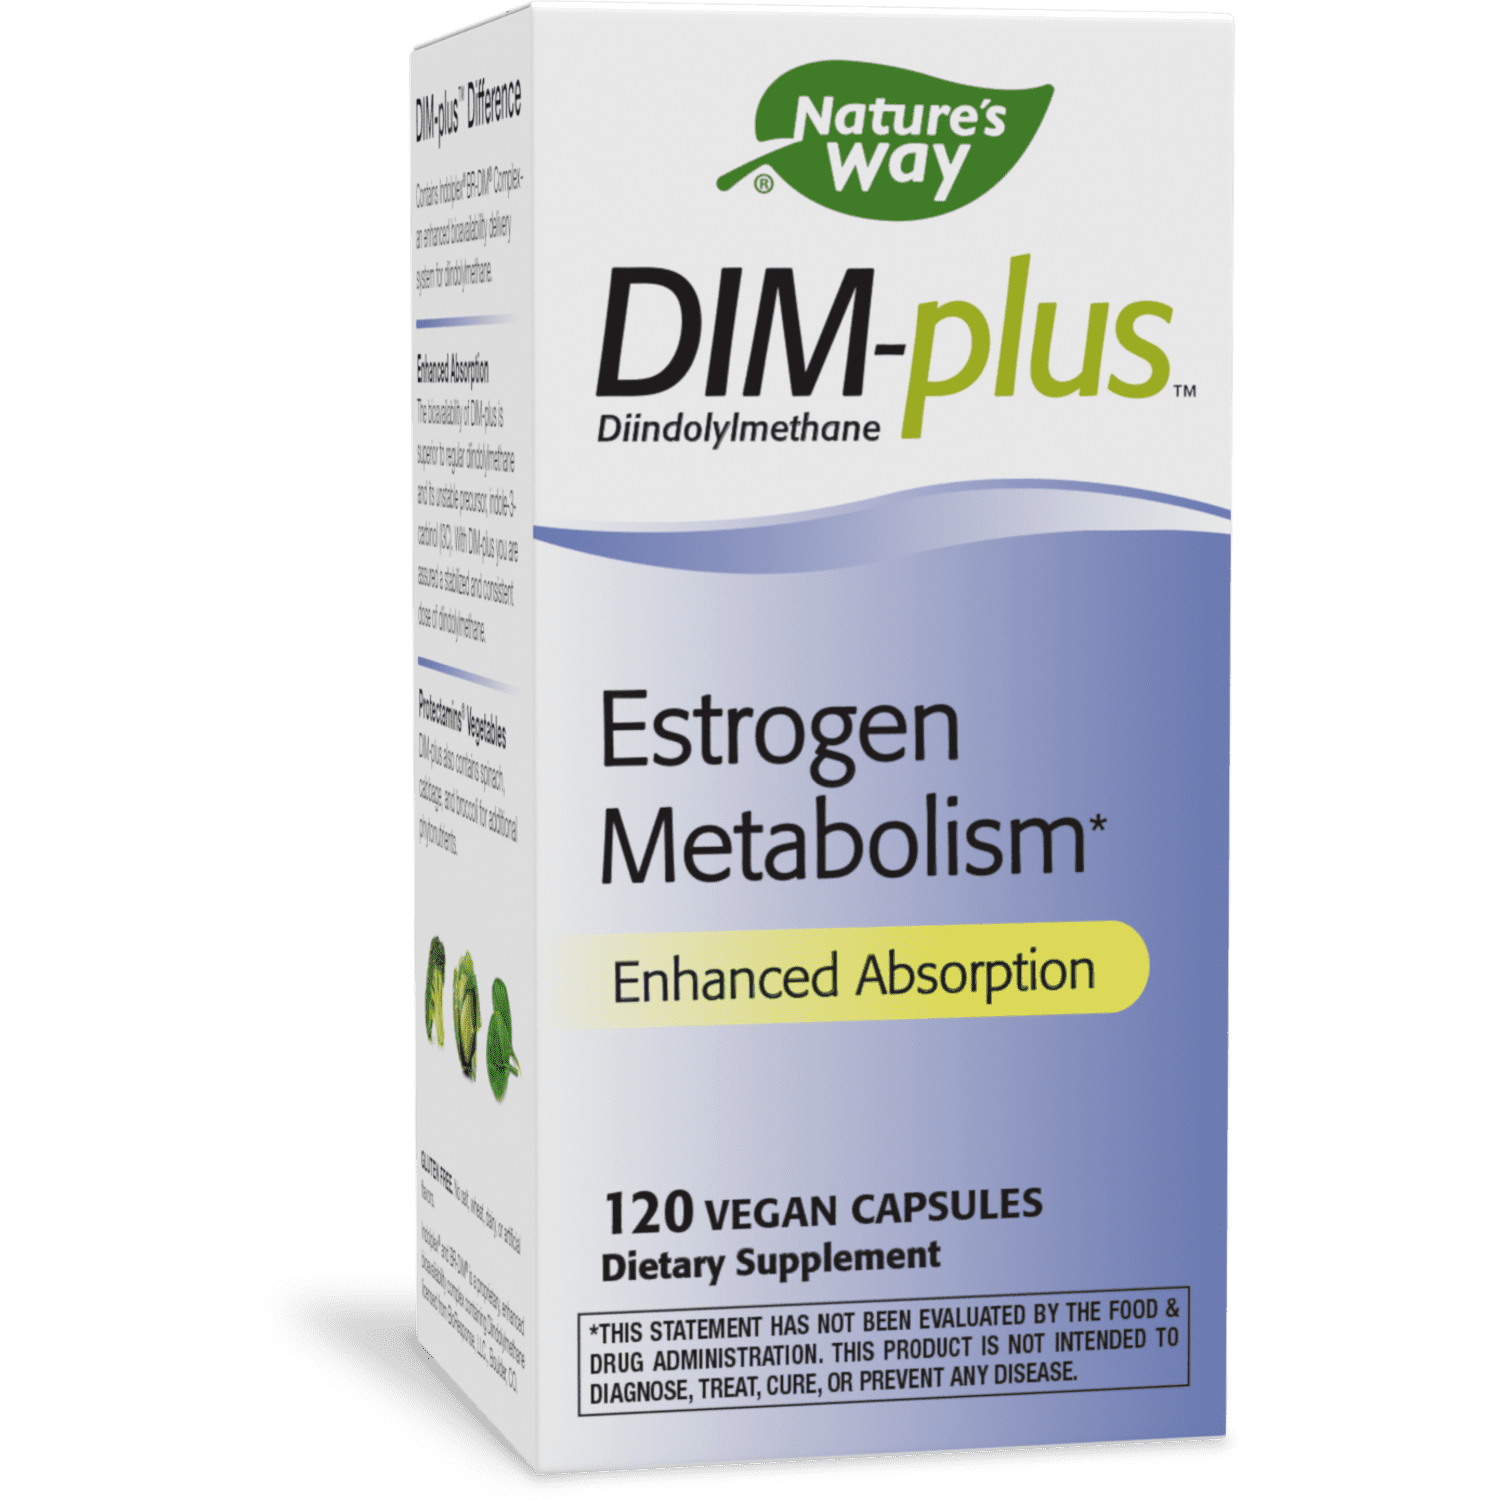 Nature's Way DIM-plus Supplement, Vegetarian Capsules, for Estrogen  Metabolism Support*, 120 Count 